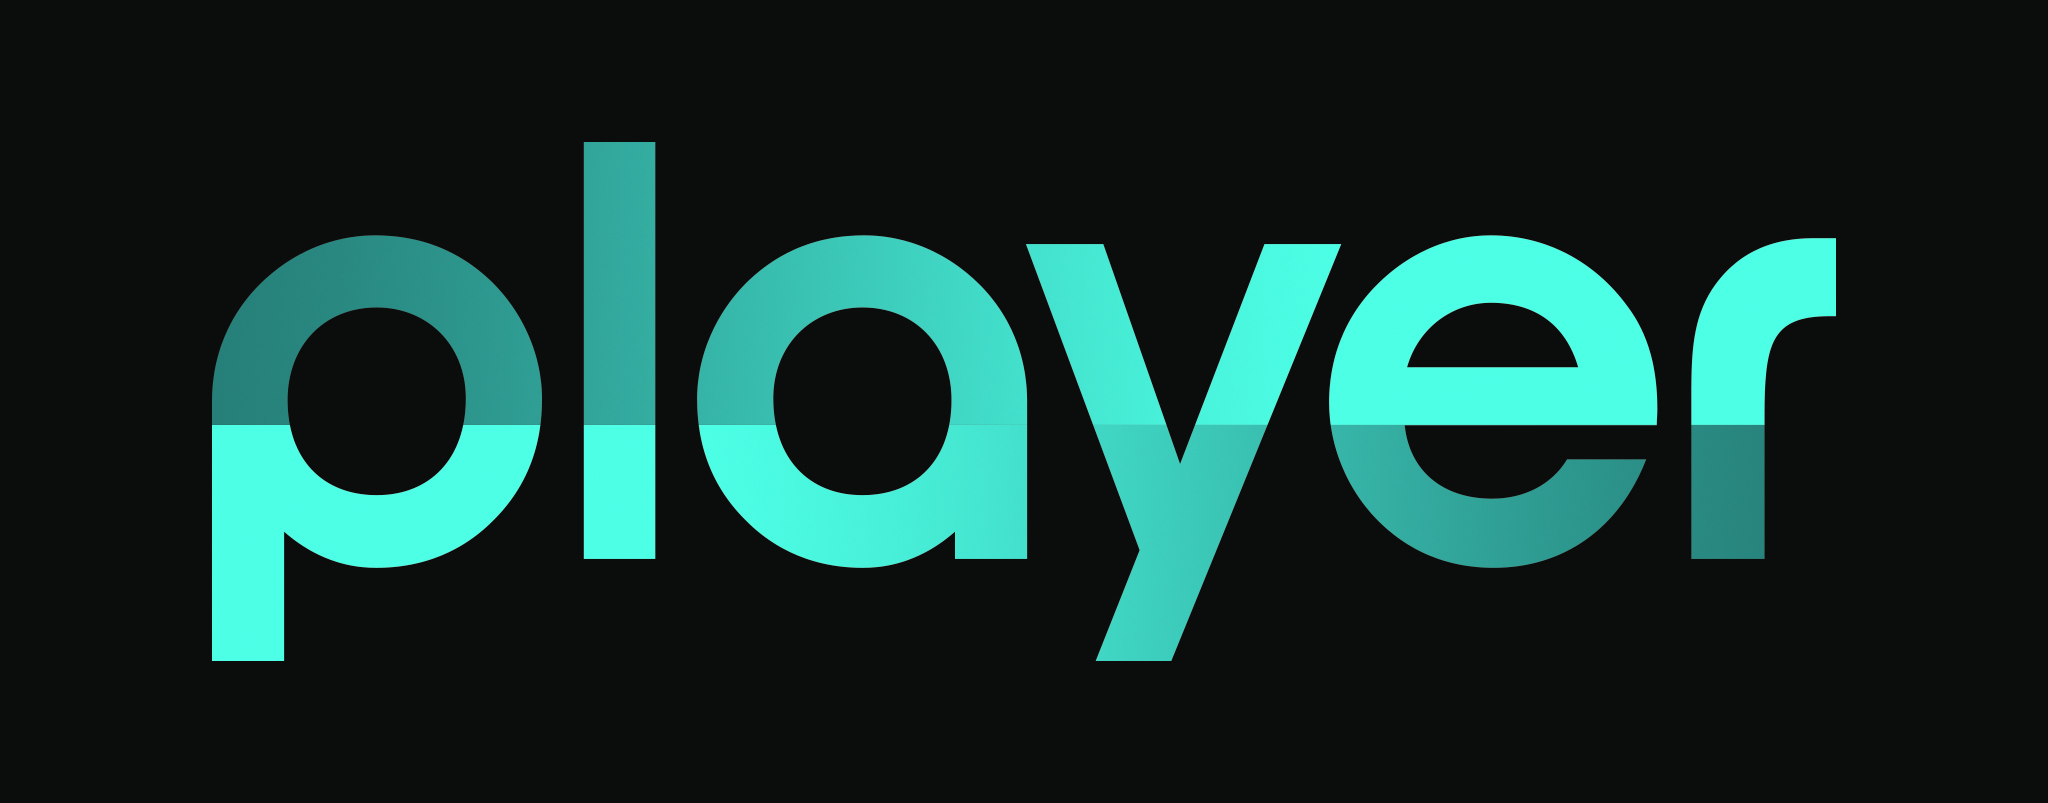 player-logo-blue-on-graphite-cmyk.jpg